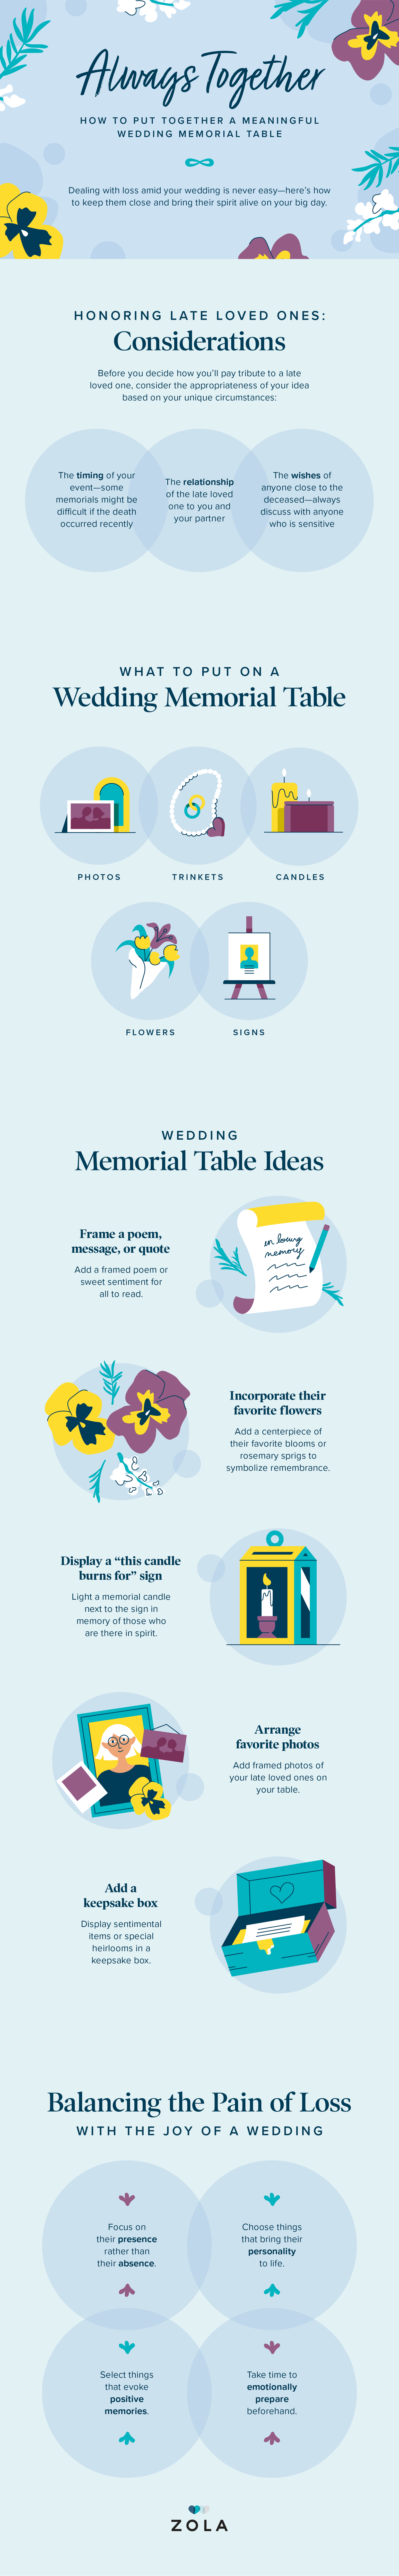 wedding-memorial-ideas